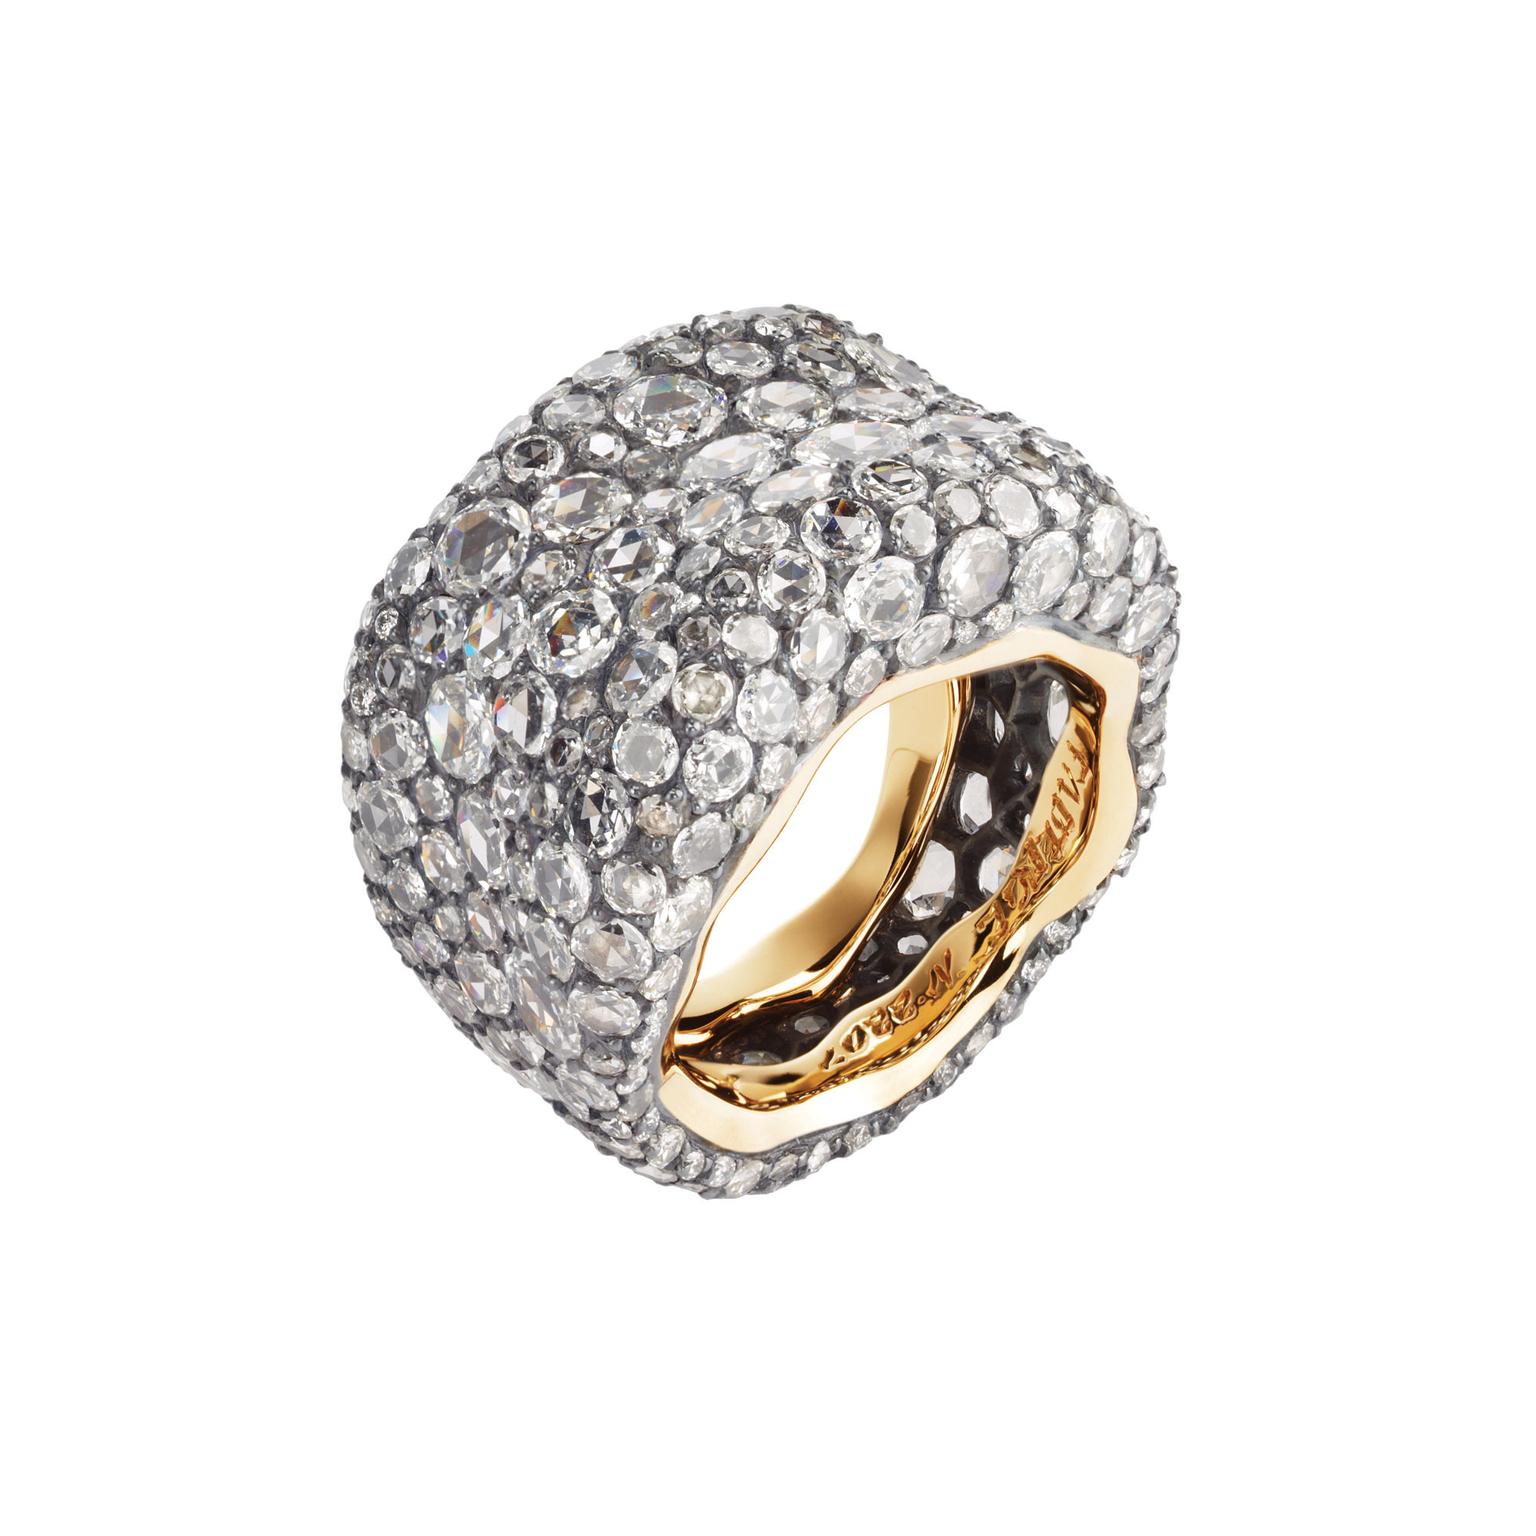 Fabergé Emotion diamond ring